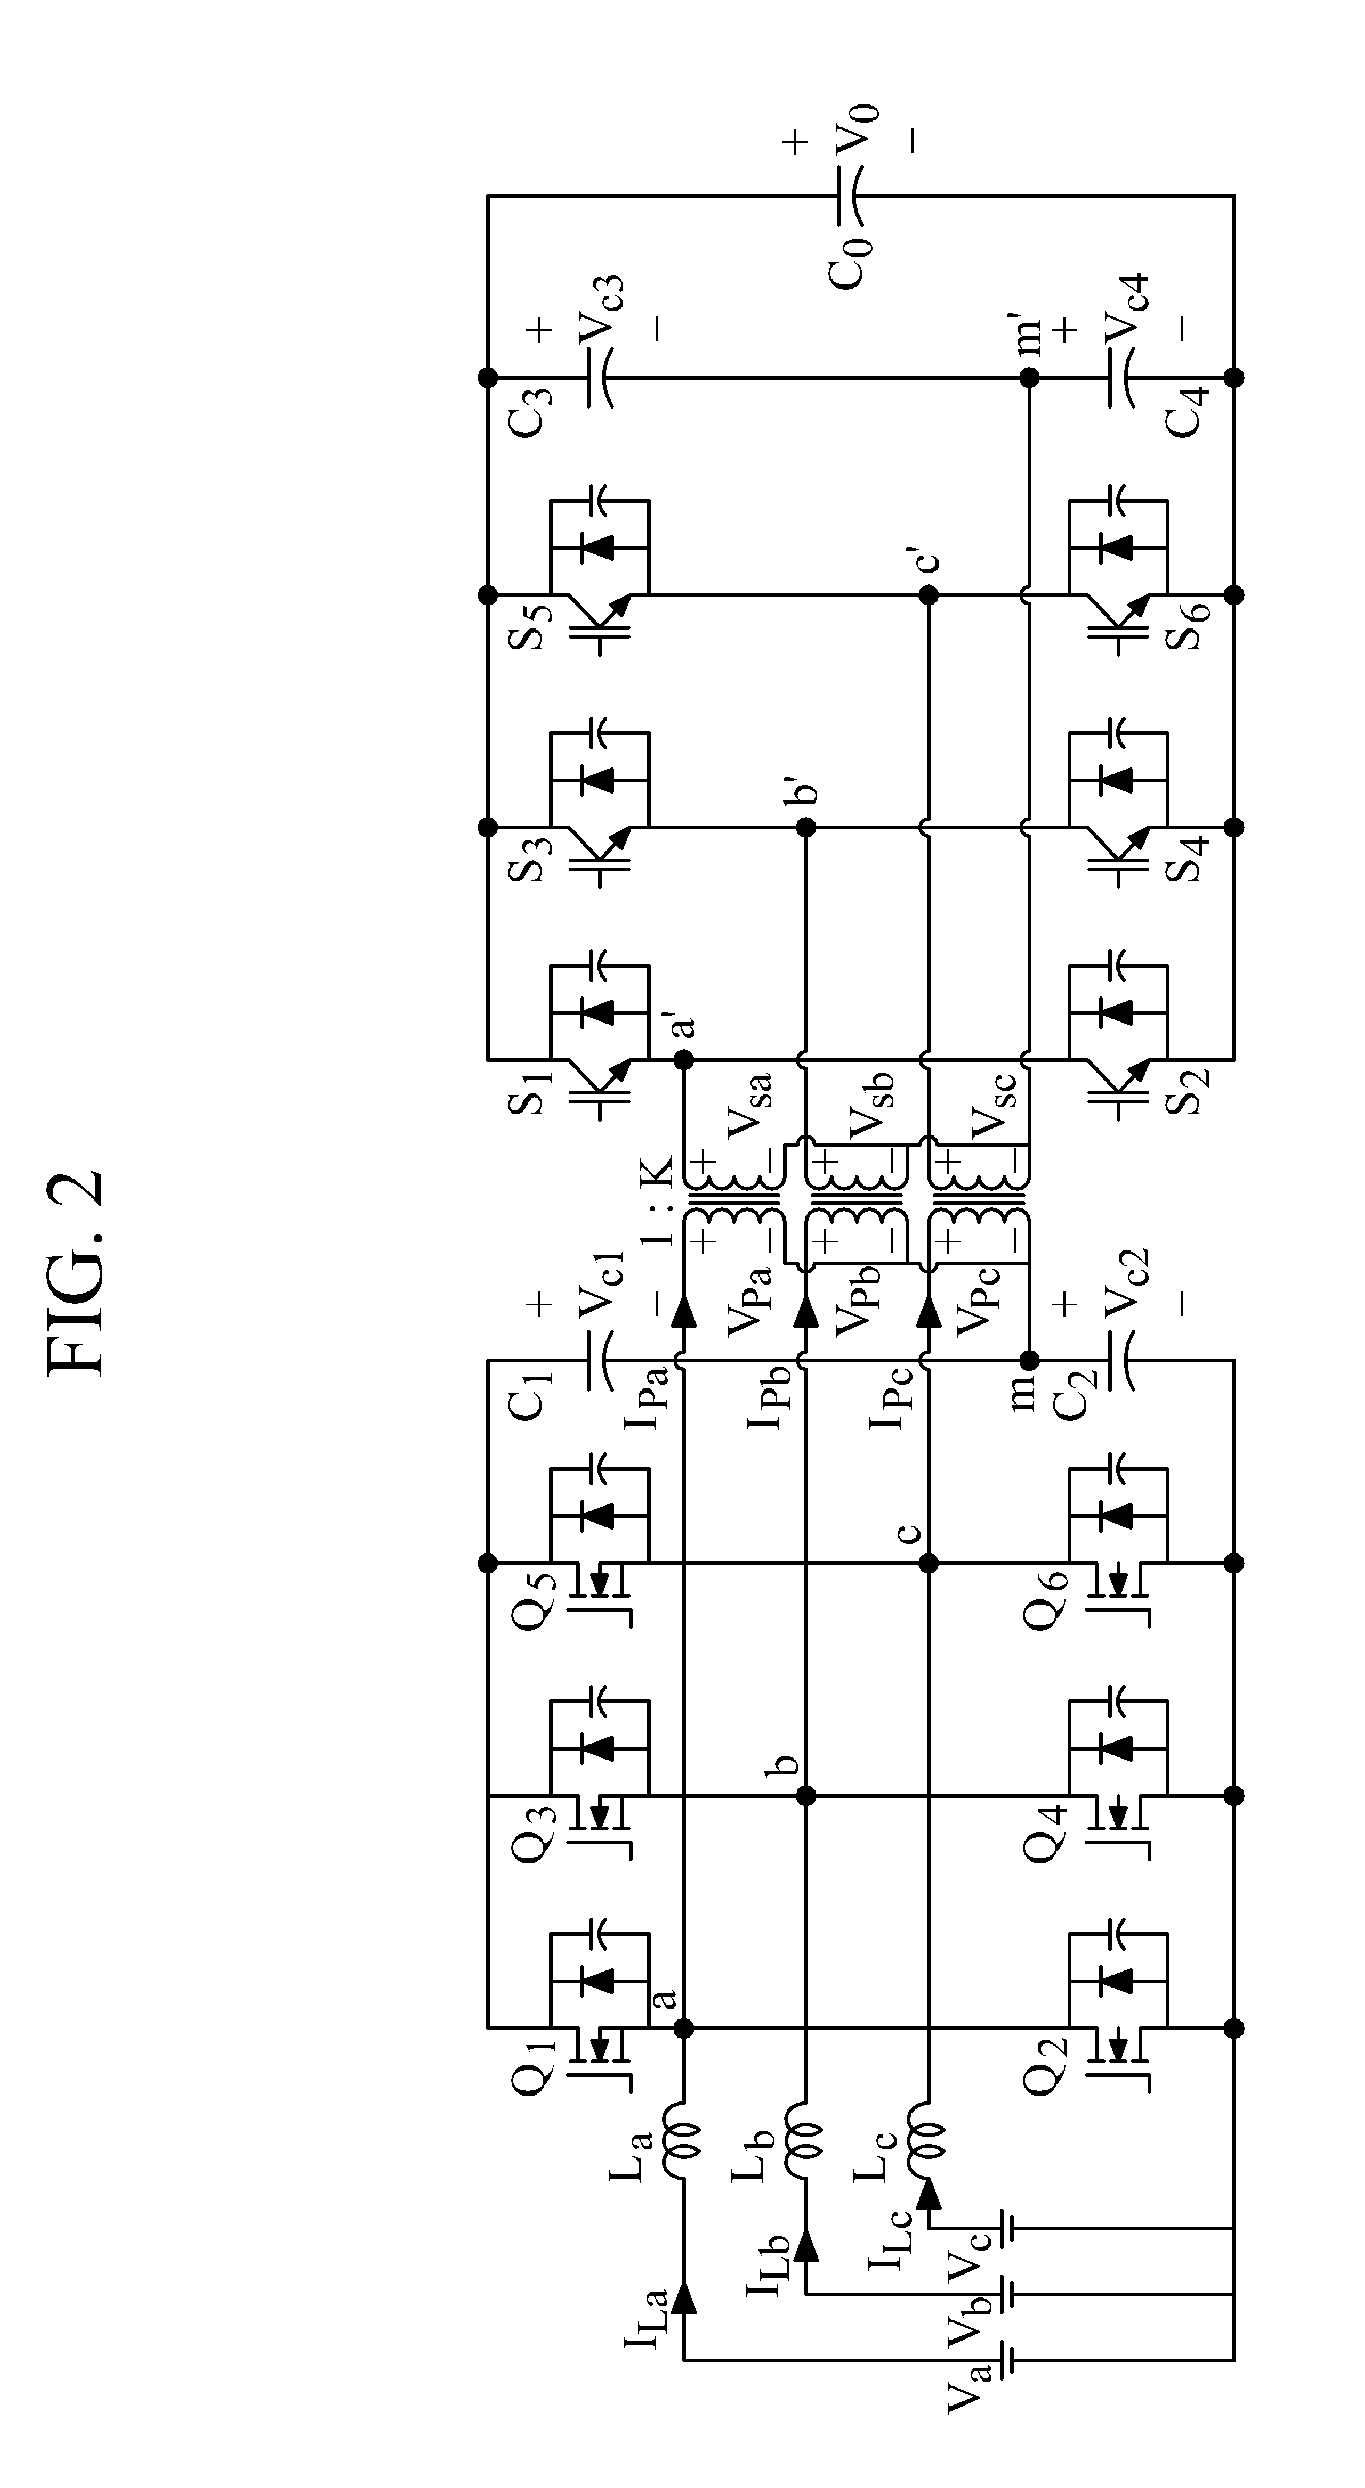 Multi-input bidirectional dc-dc converter